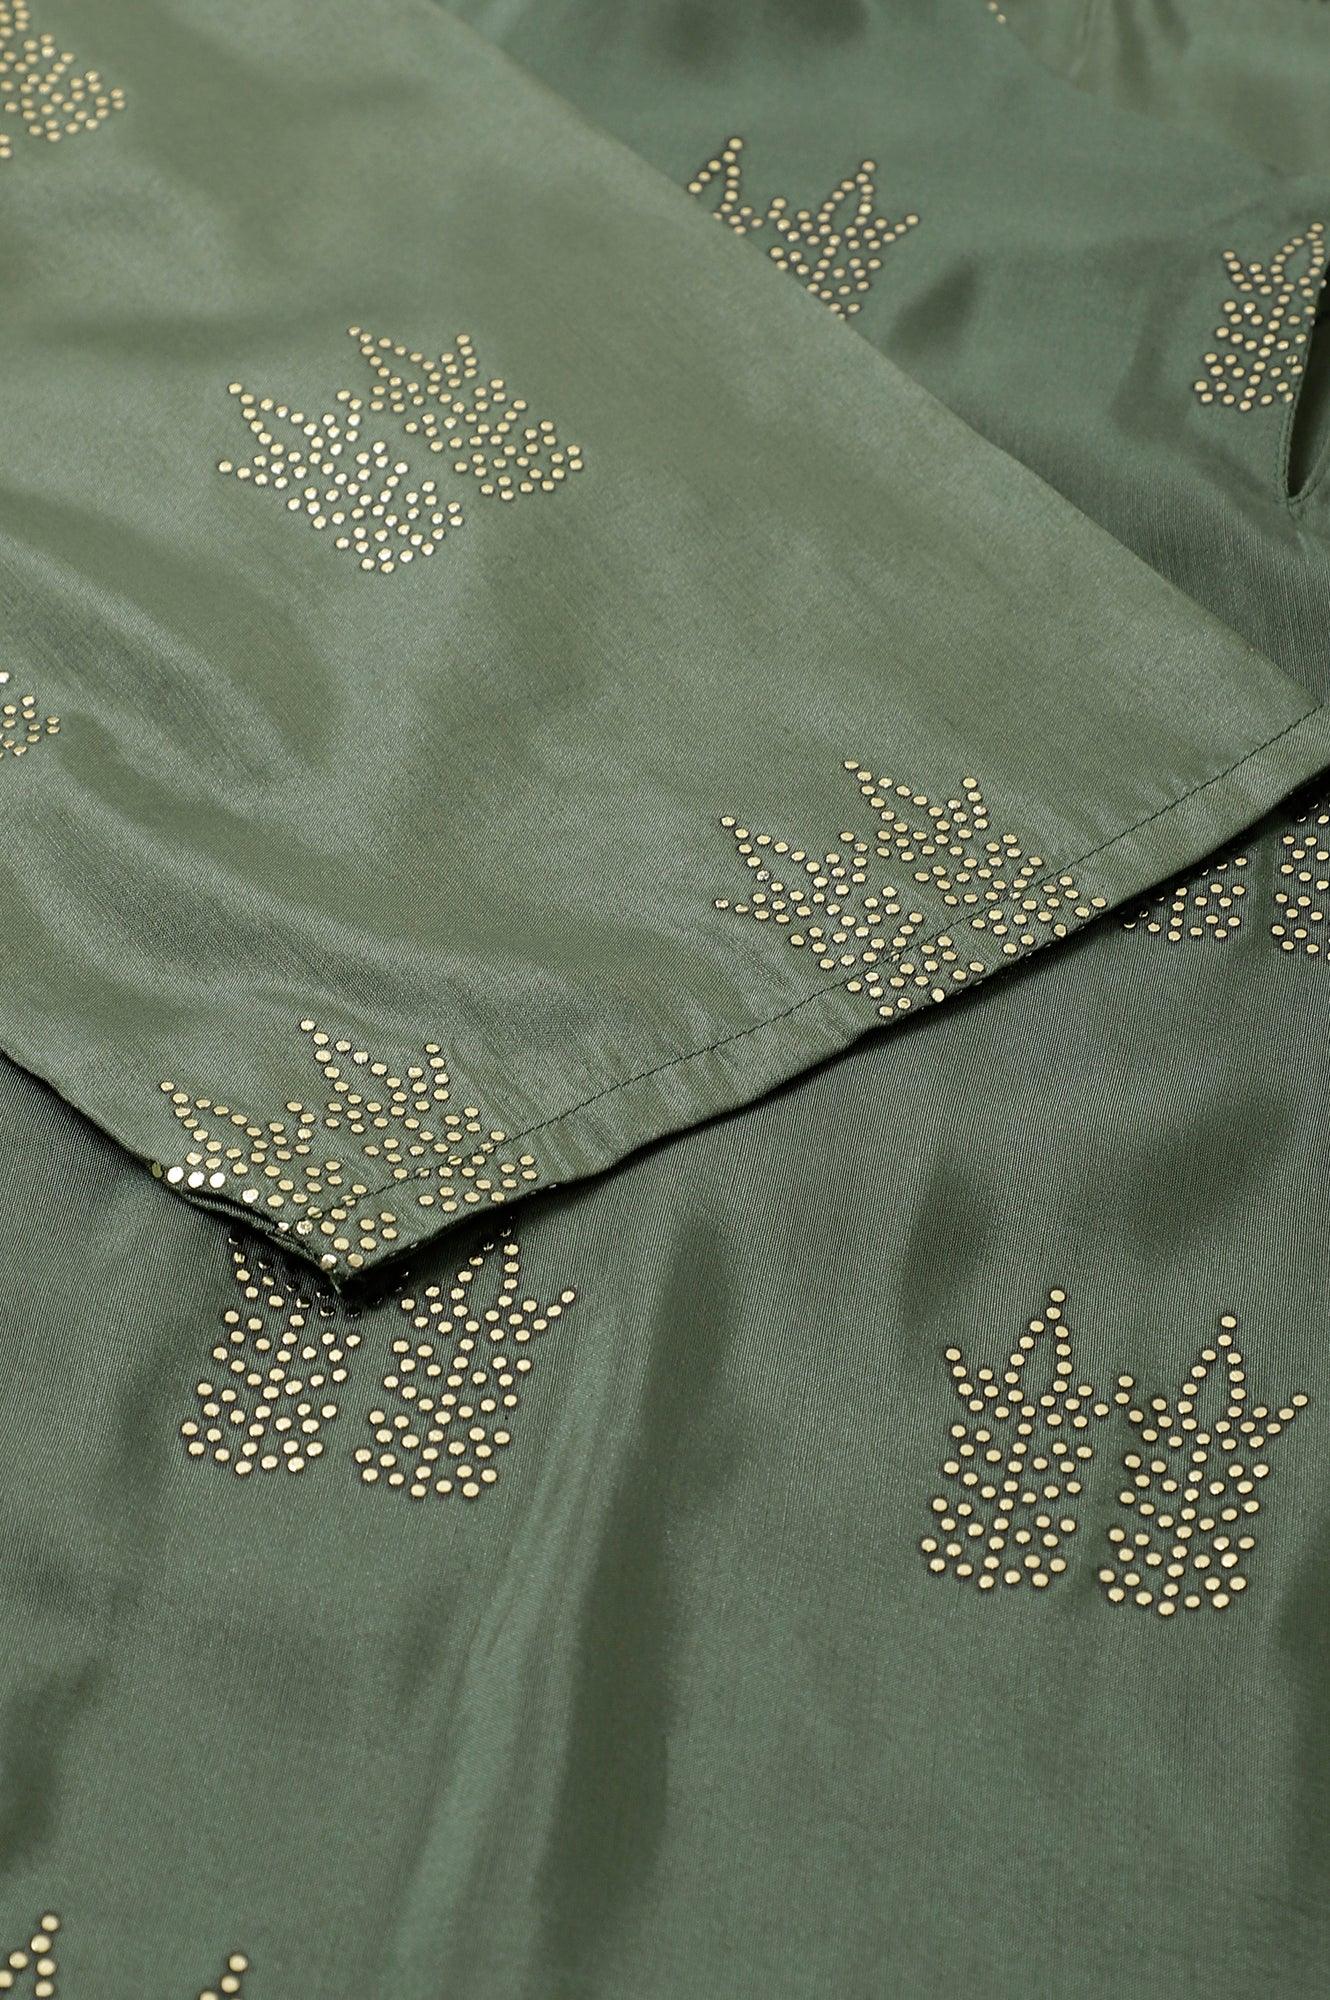 Green Shantung Plus Size kurta With Mukaish Print - wforwoman